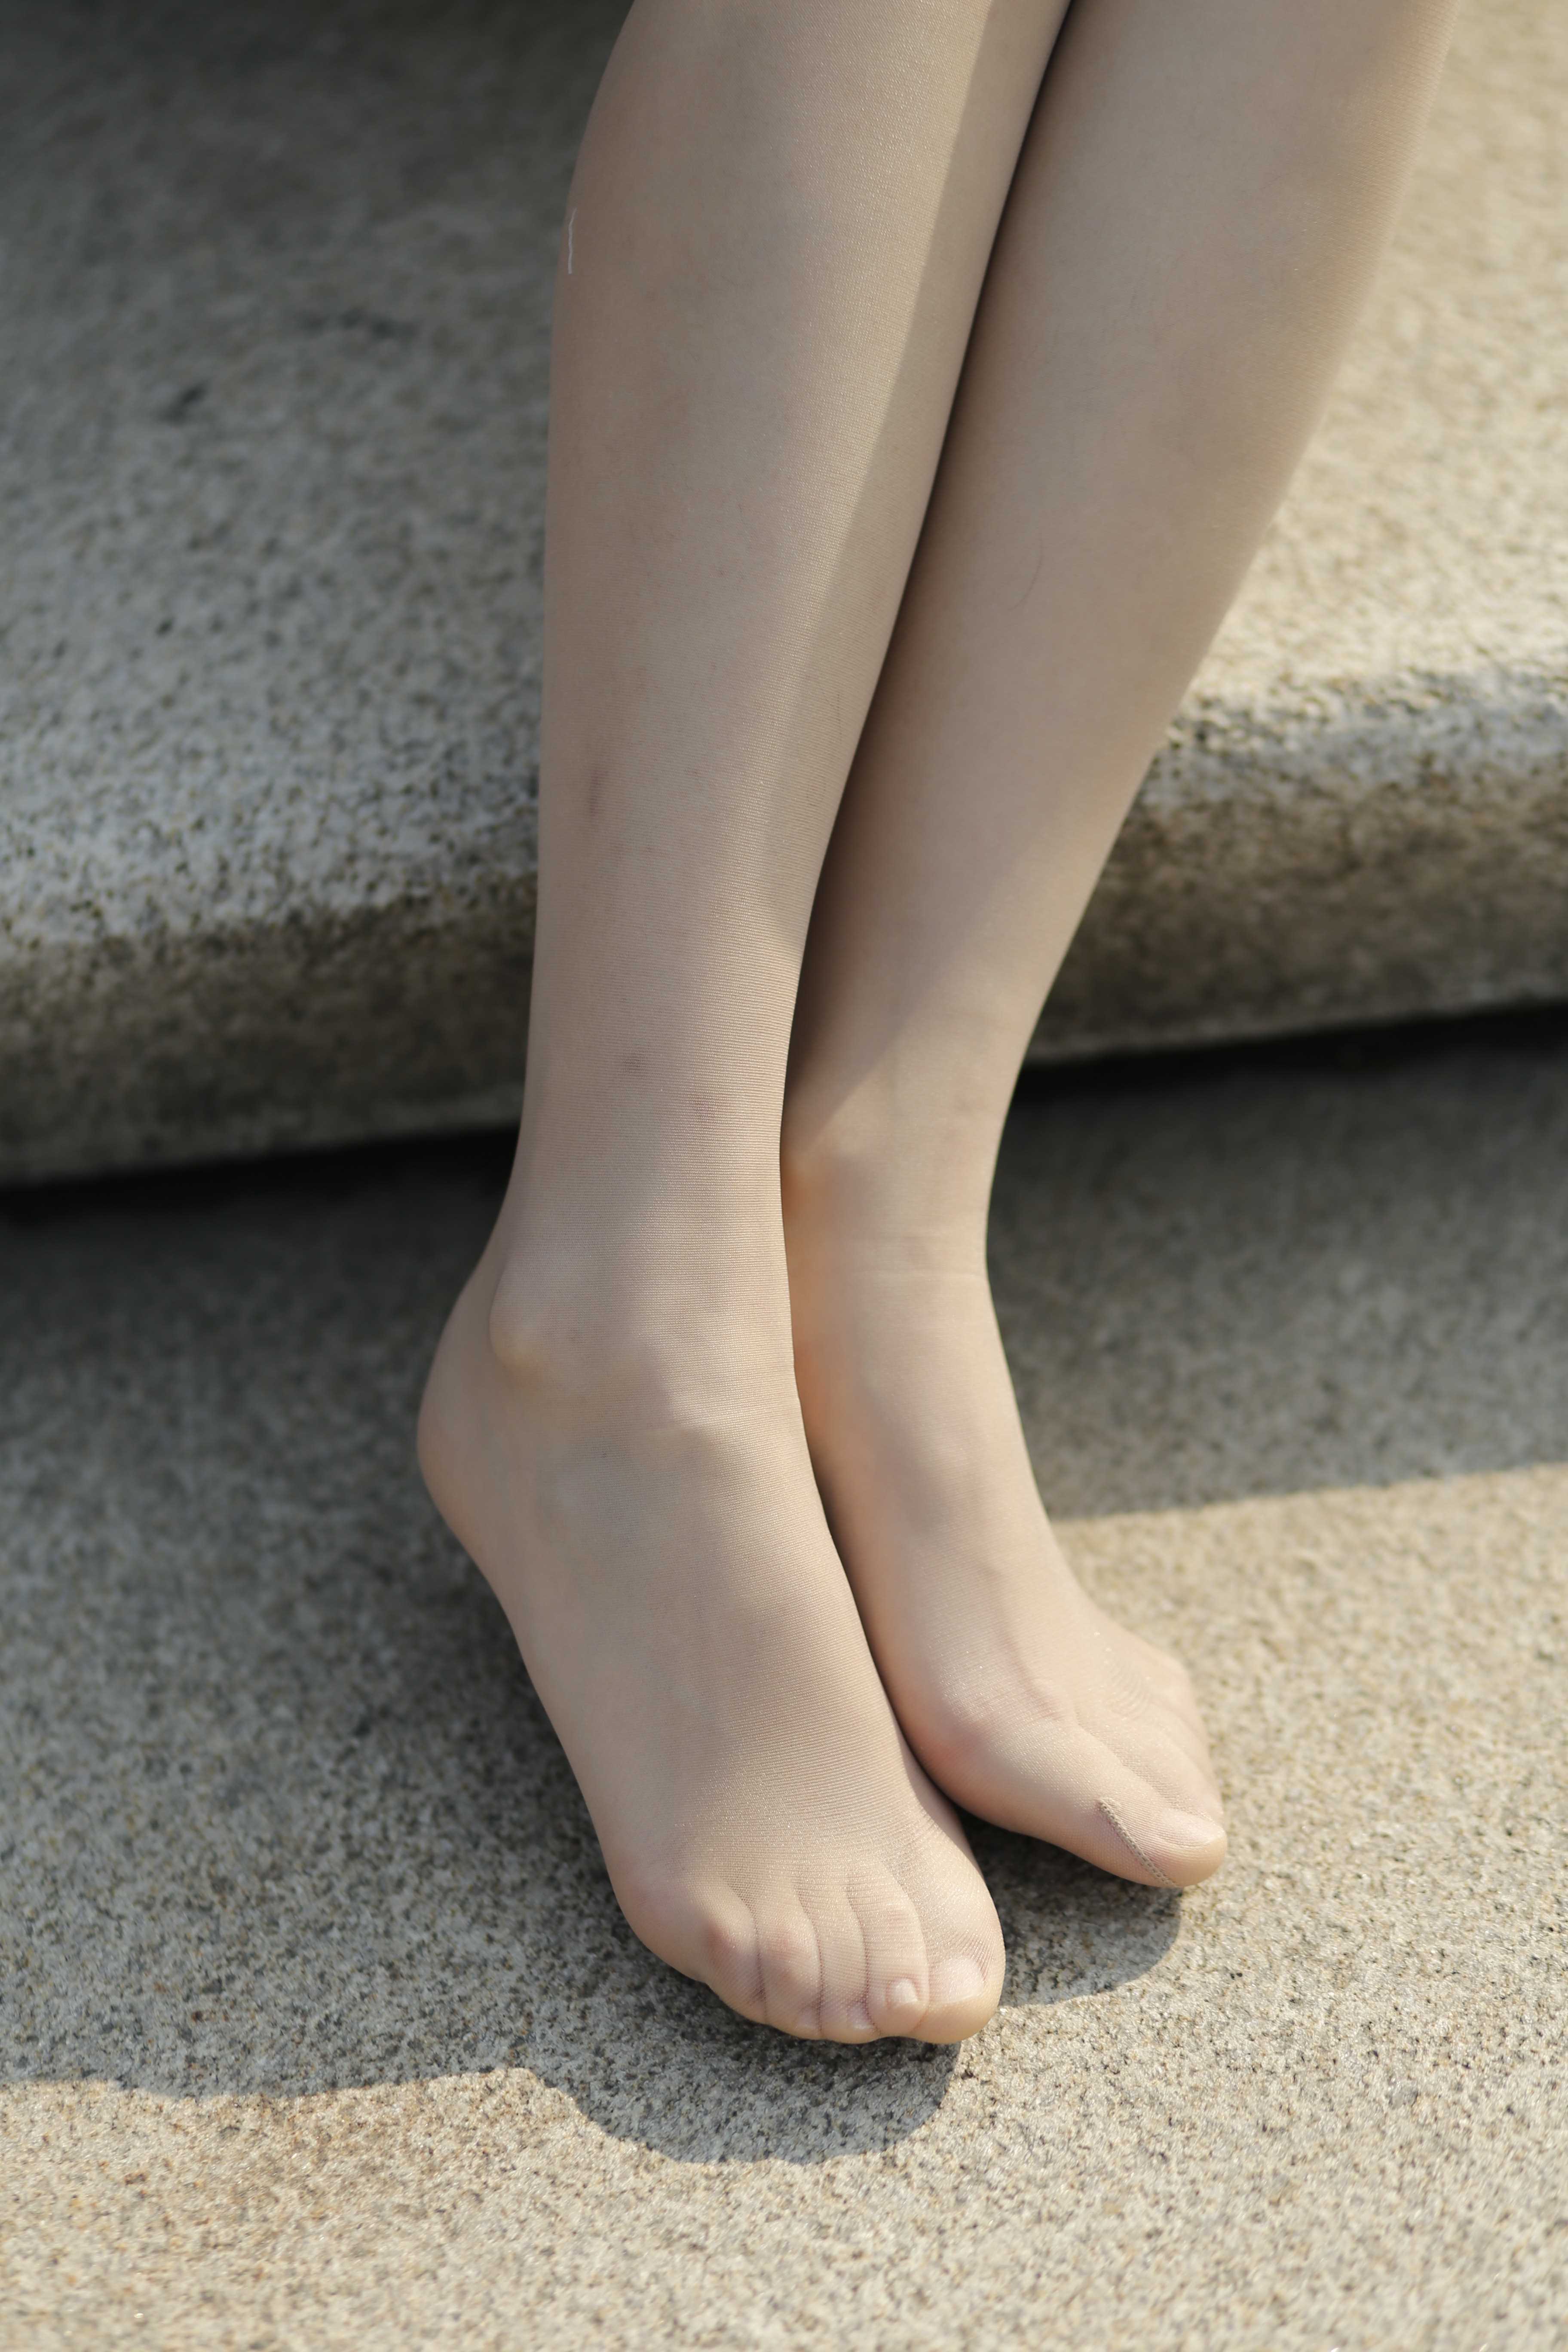 China Beauty Legs and feet 335